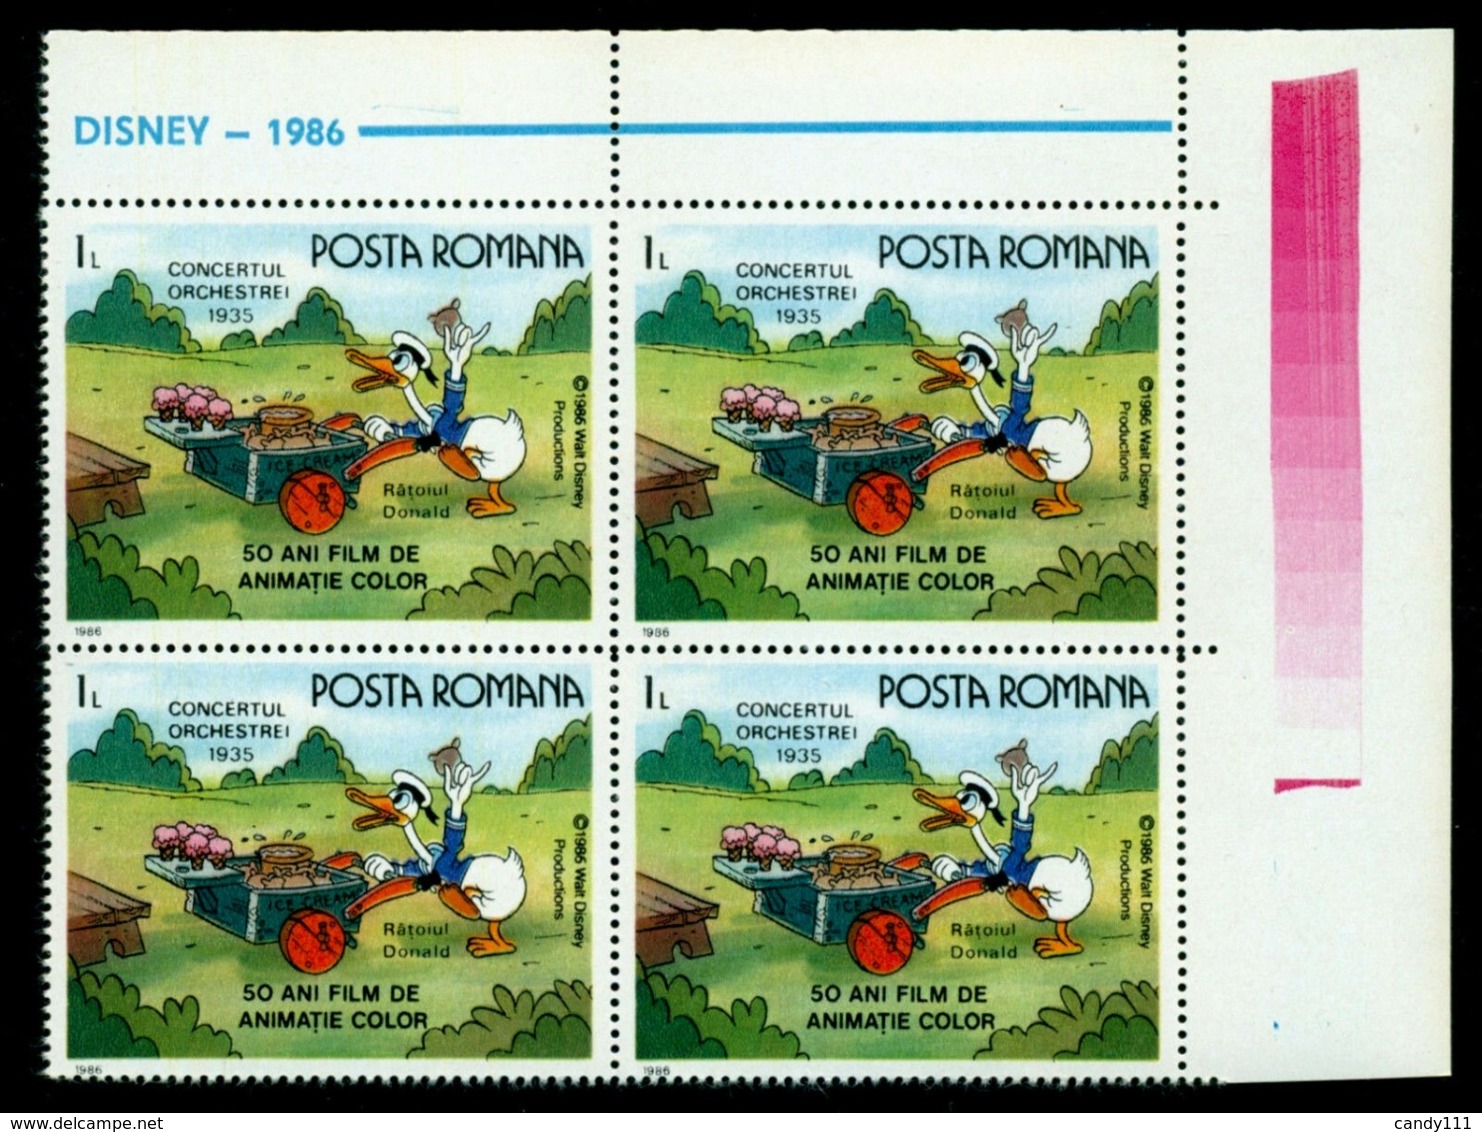 1986 Disney,Donald Duck Sell Ice Cream,Orchestra,Cartoons,Film,Romania,MNH,x4 - Disney